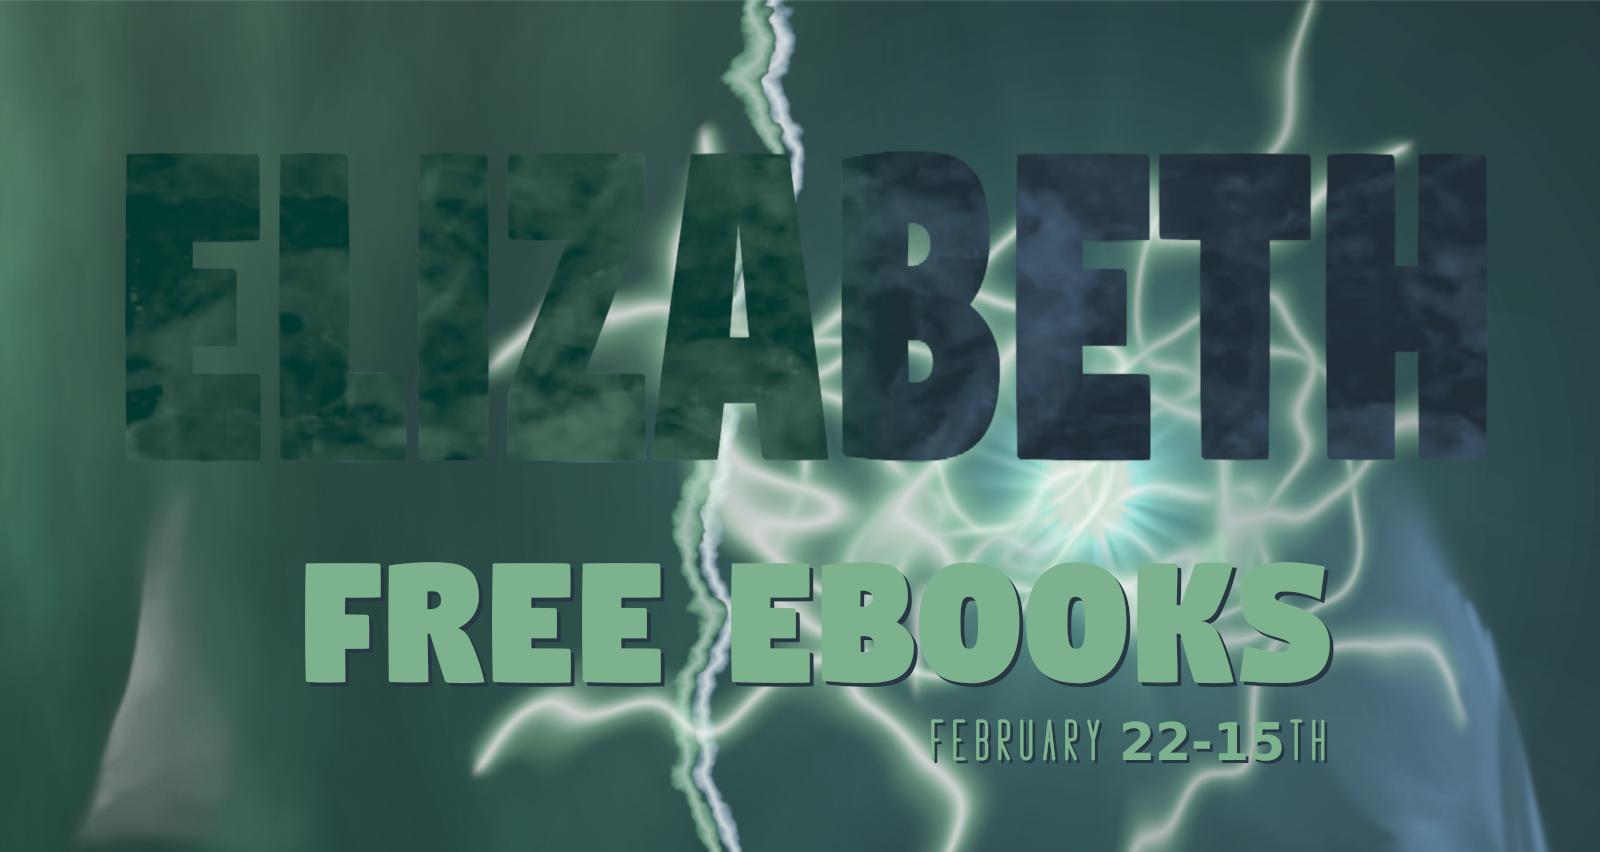 Free Ebooks!